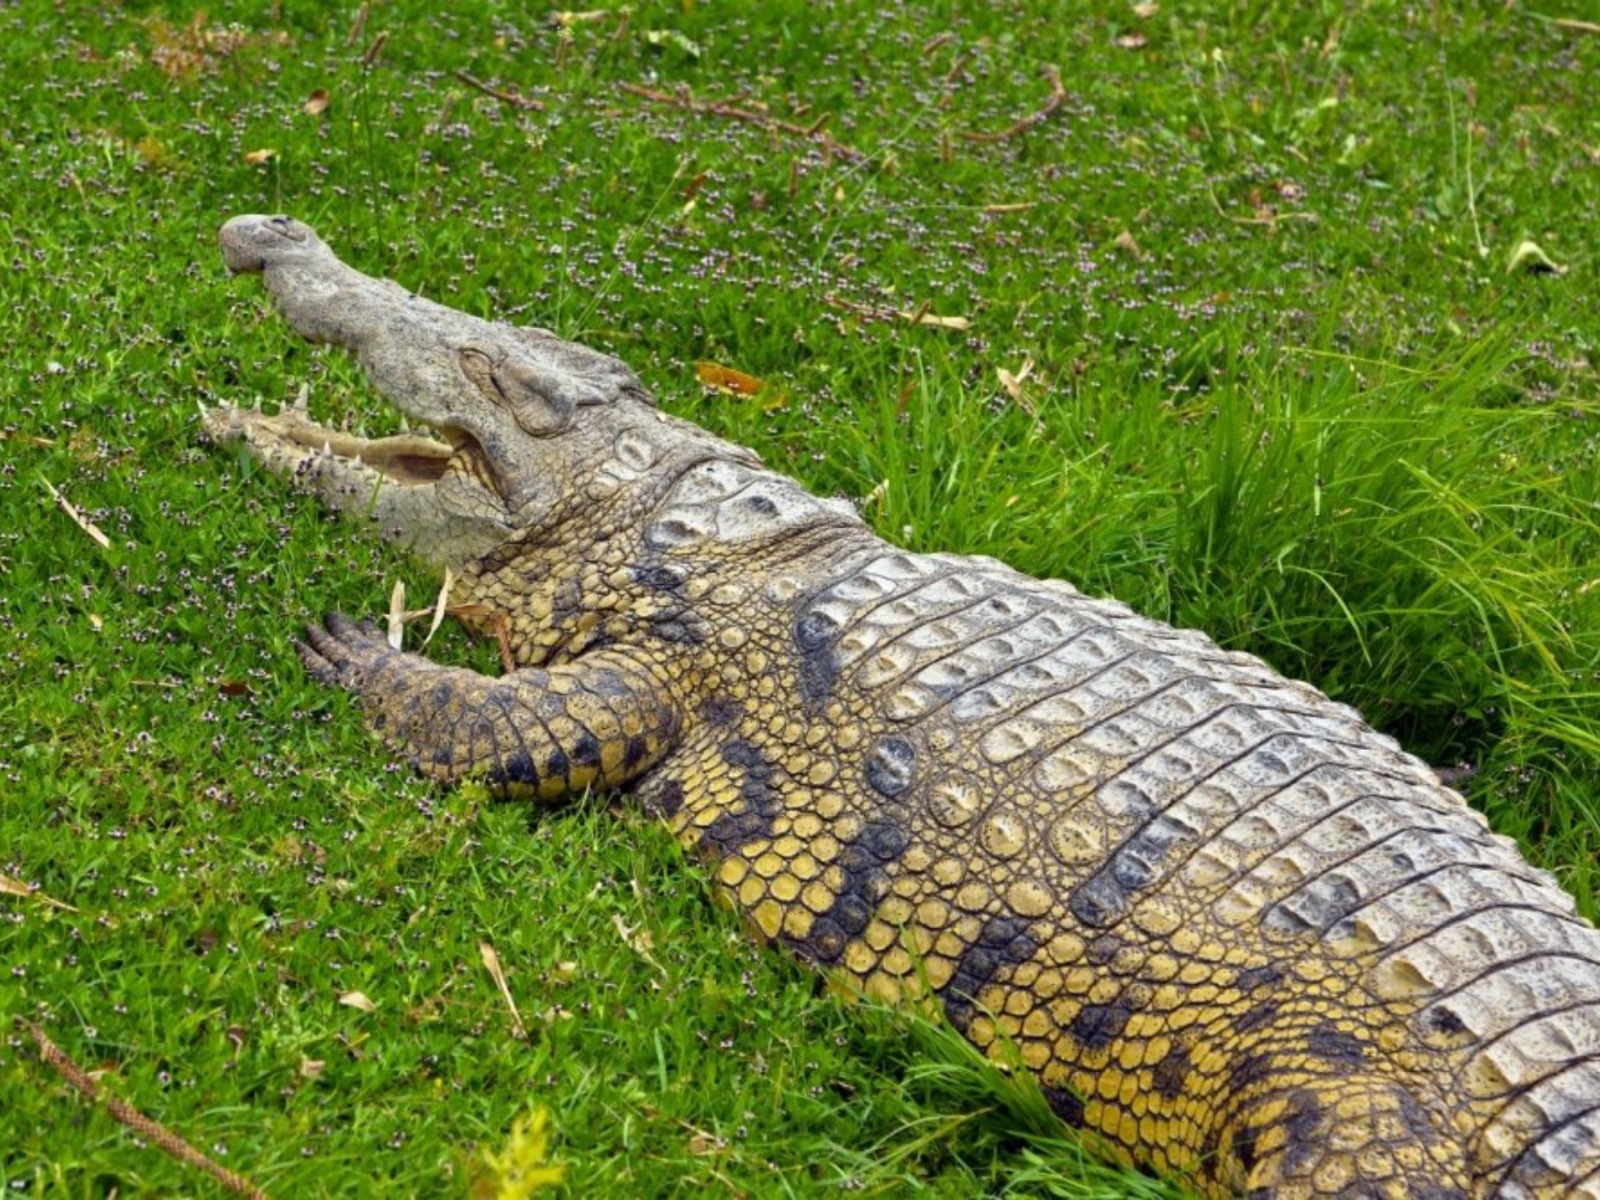 Крокодил  